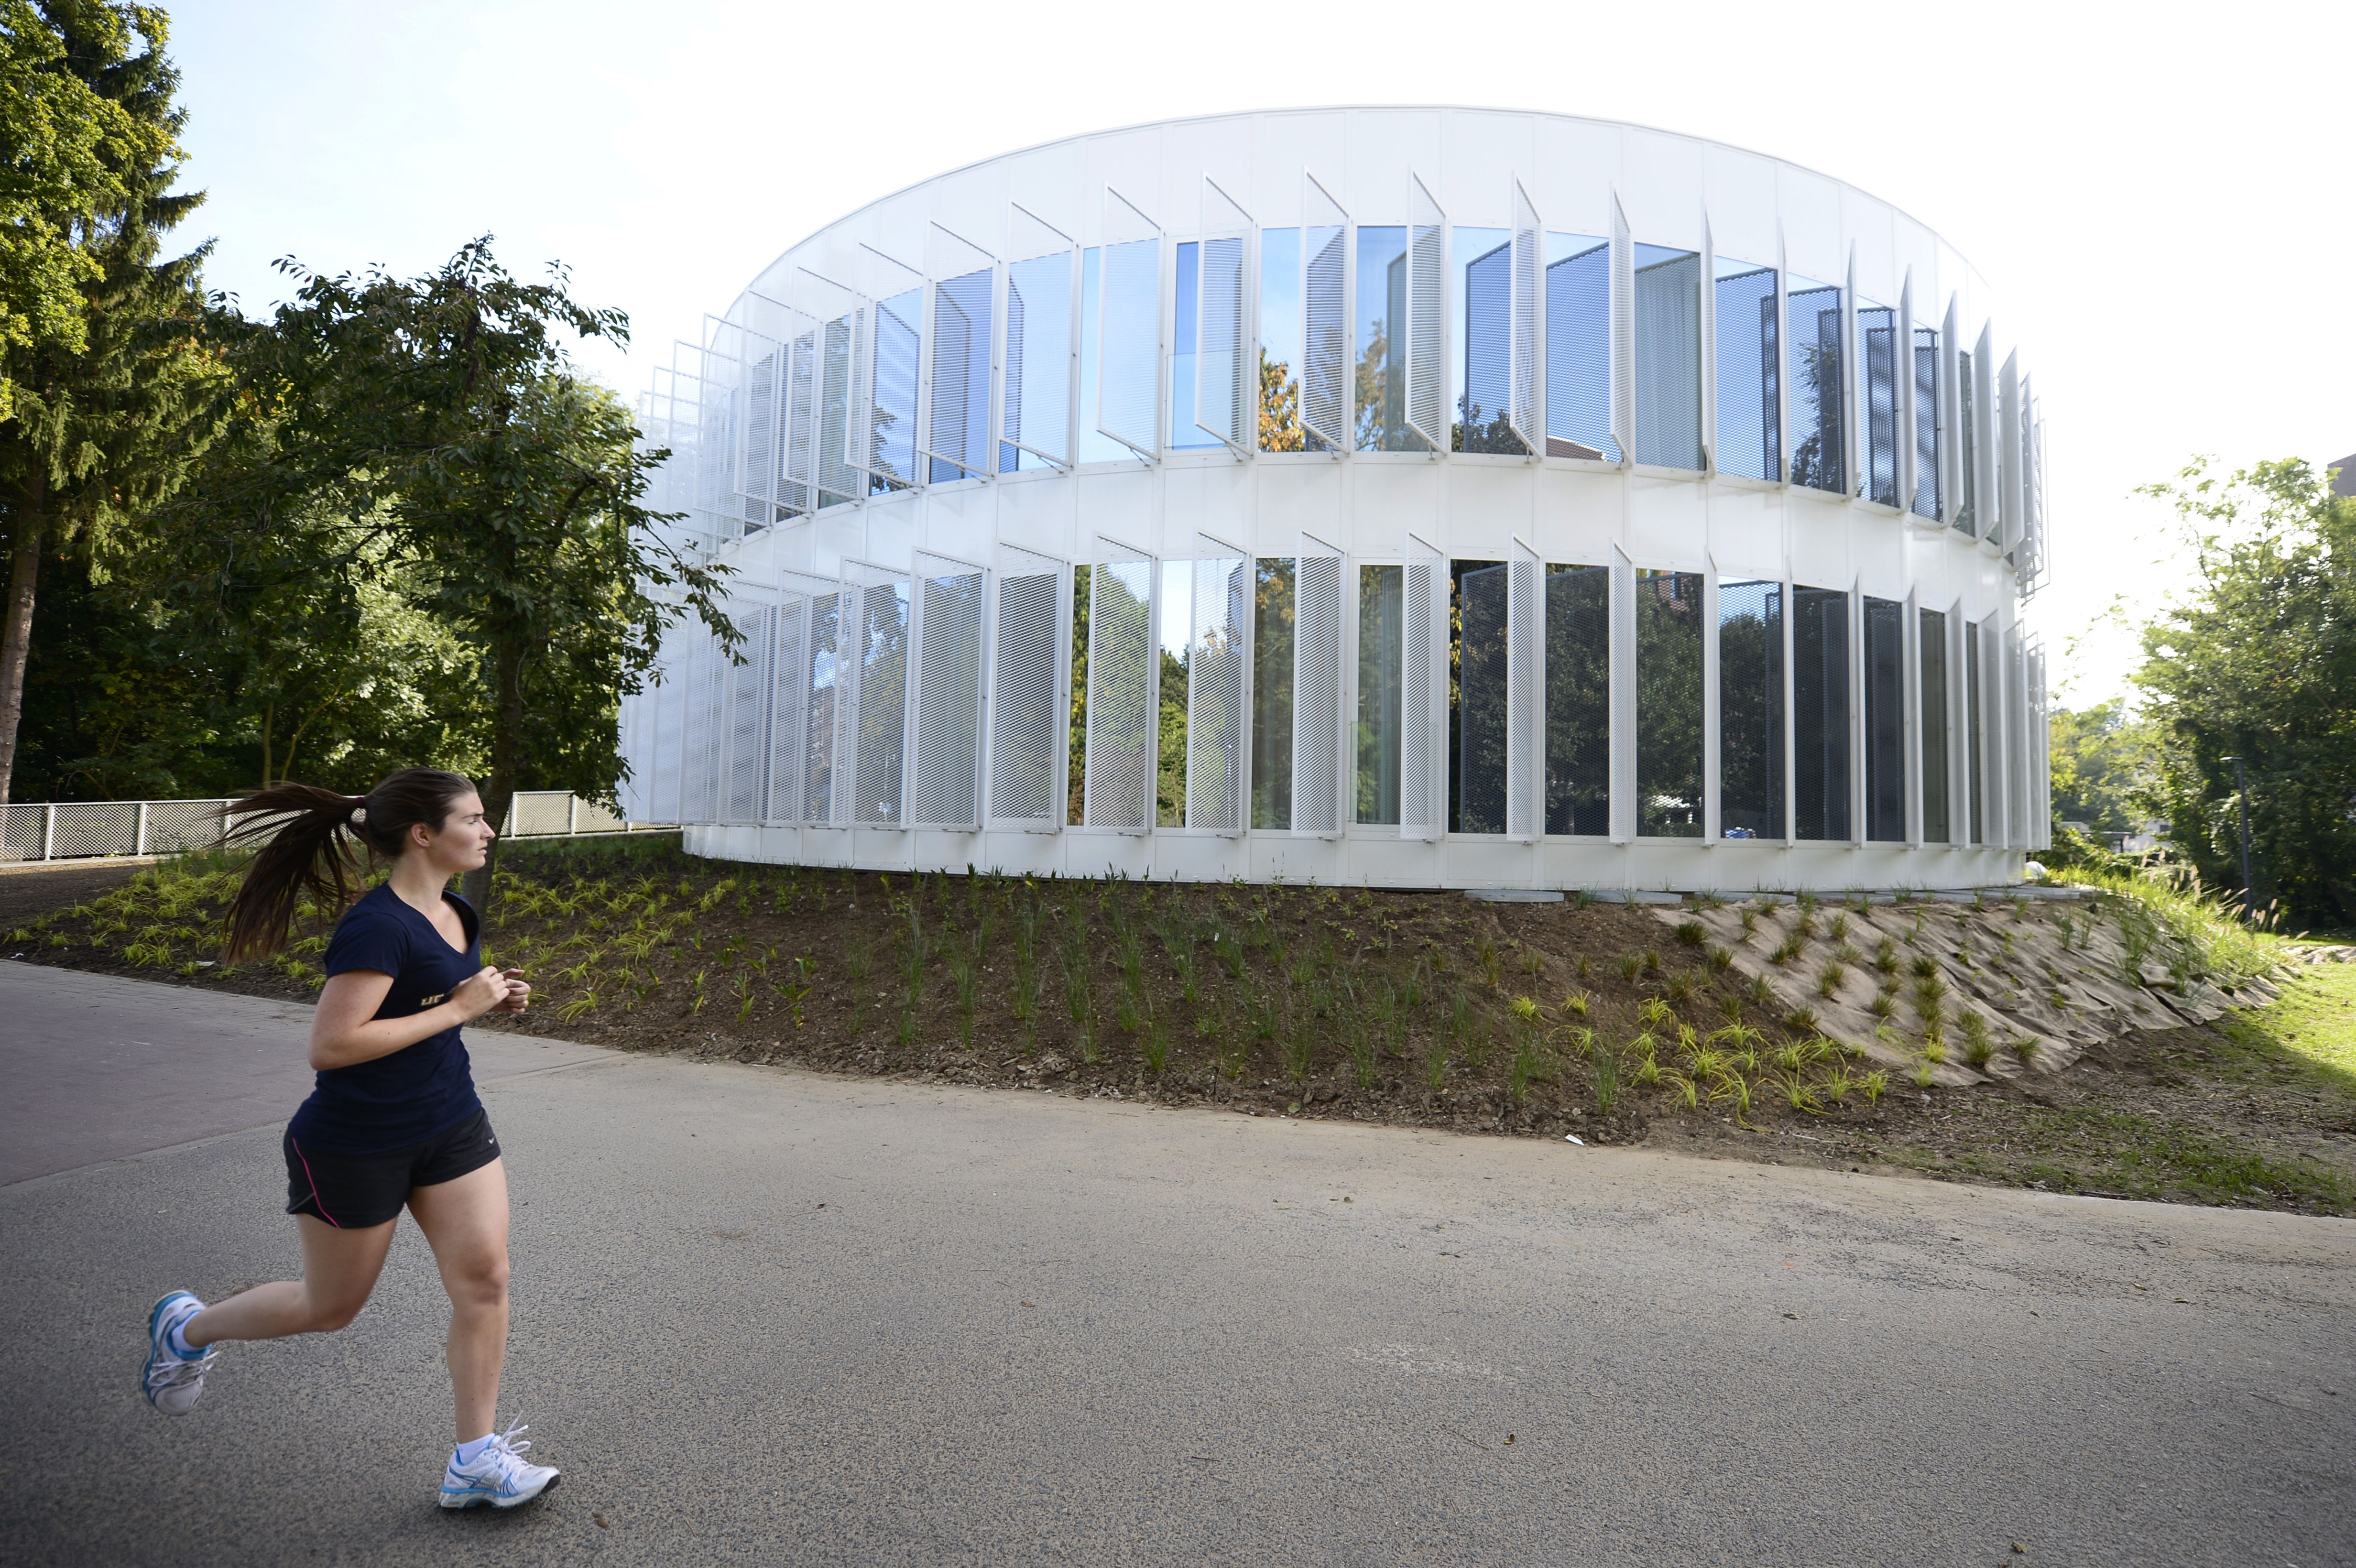 Bakala Academy building, a cooperation between the KU Leuven university and ZB Sports Development. ©BELGA PHOTO (YORICK JANSENS)